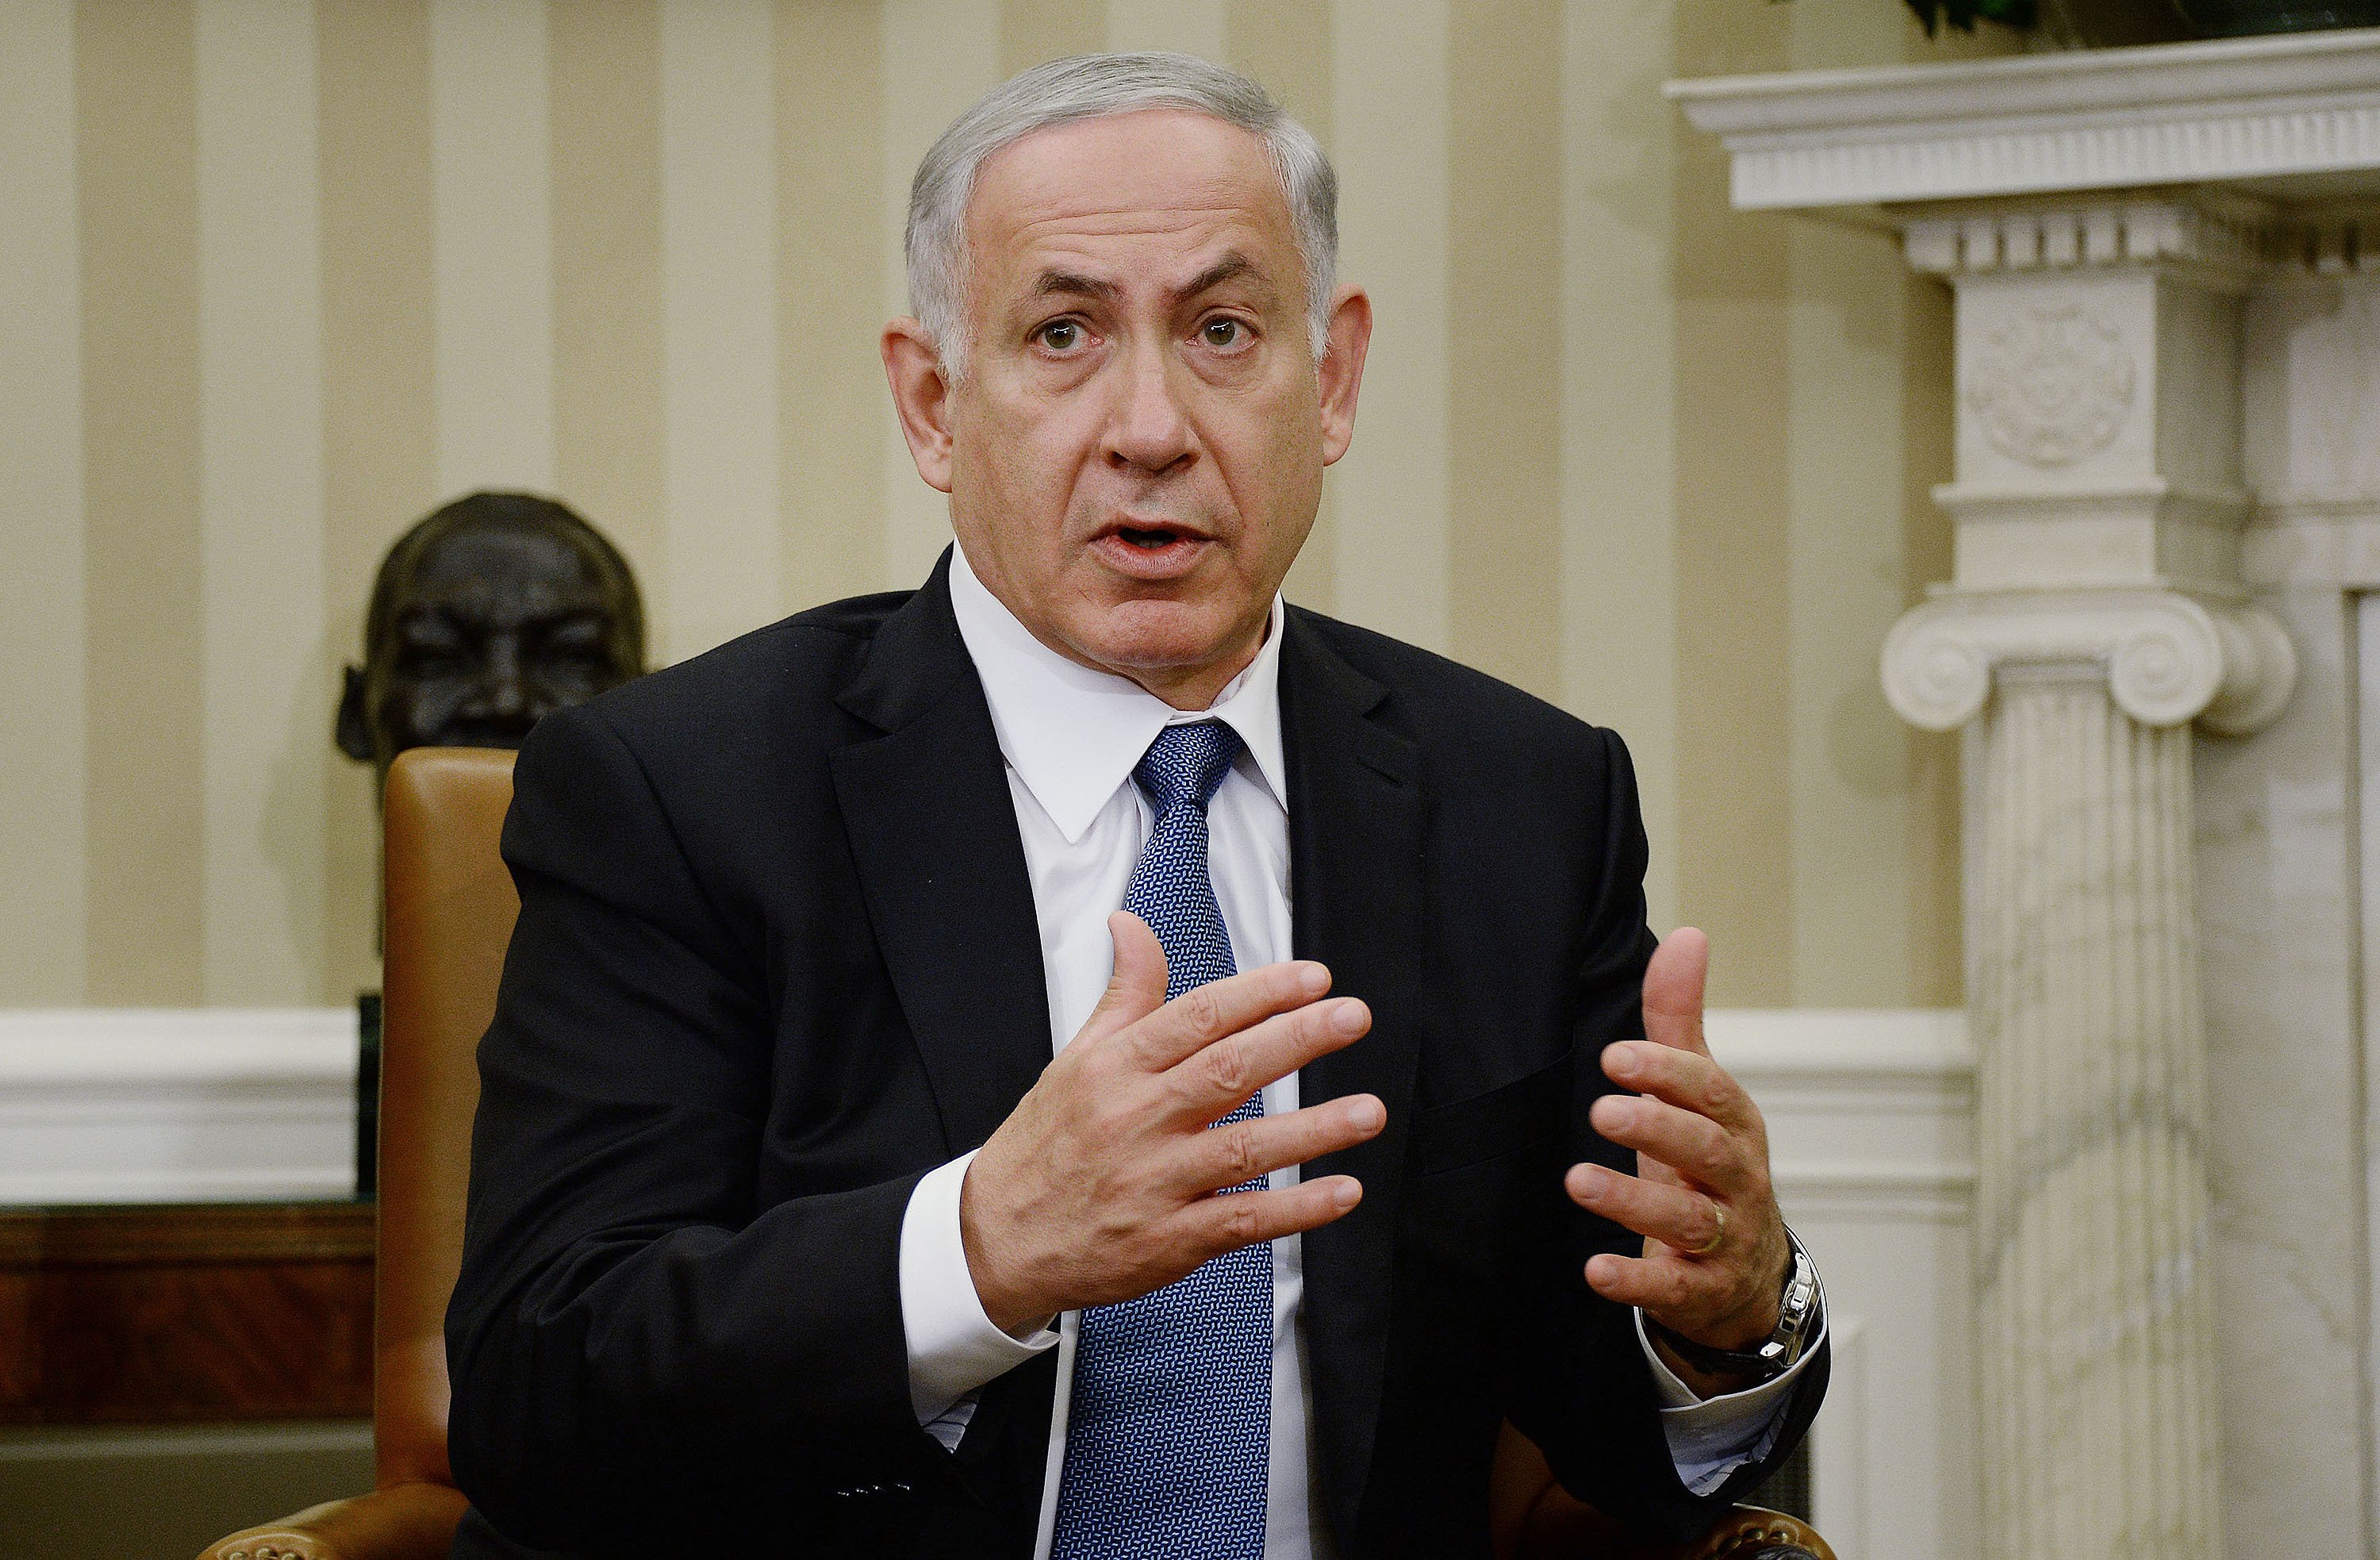 Barack Obama Meets with PM Netanyahu of Israel